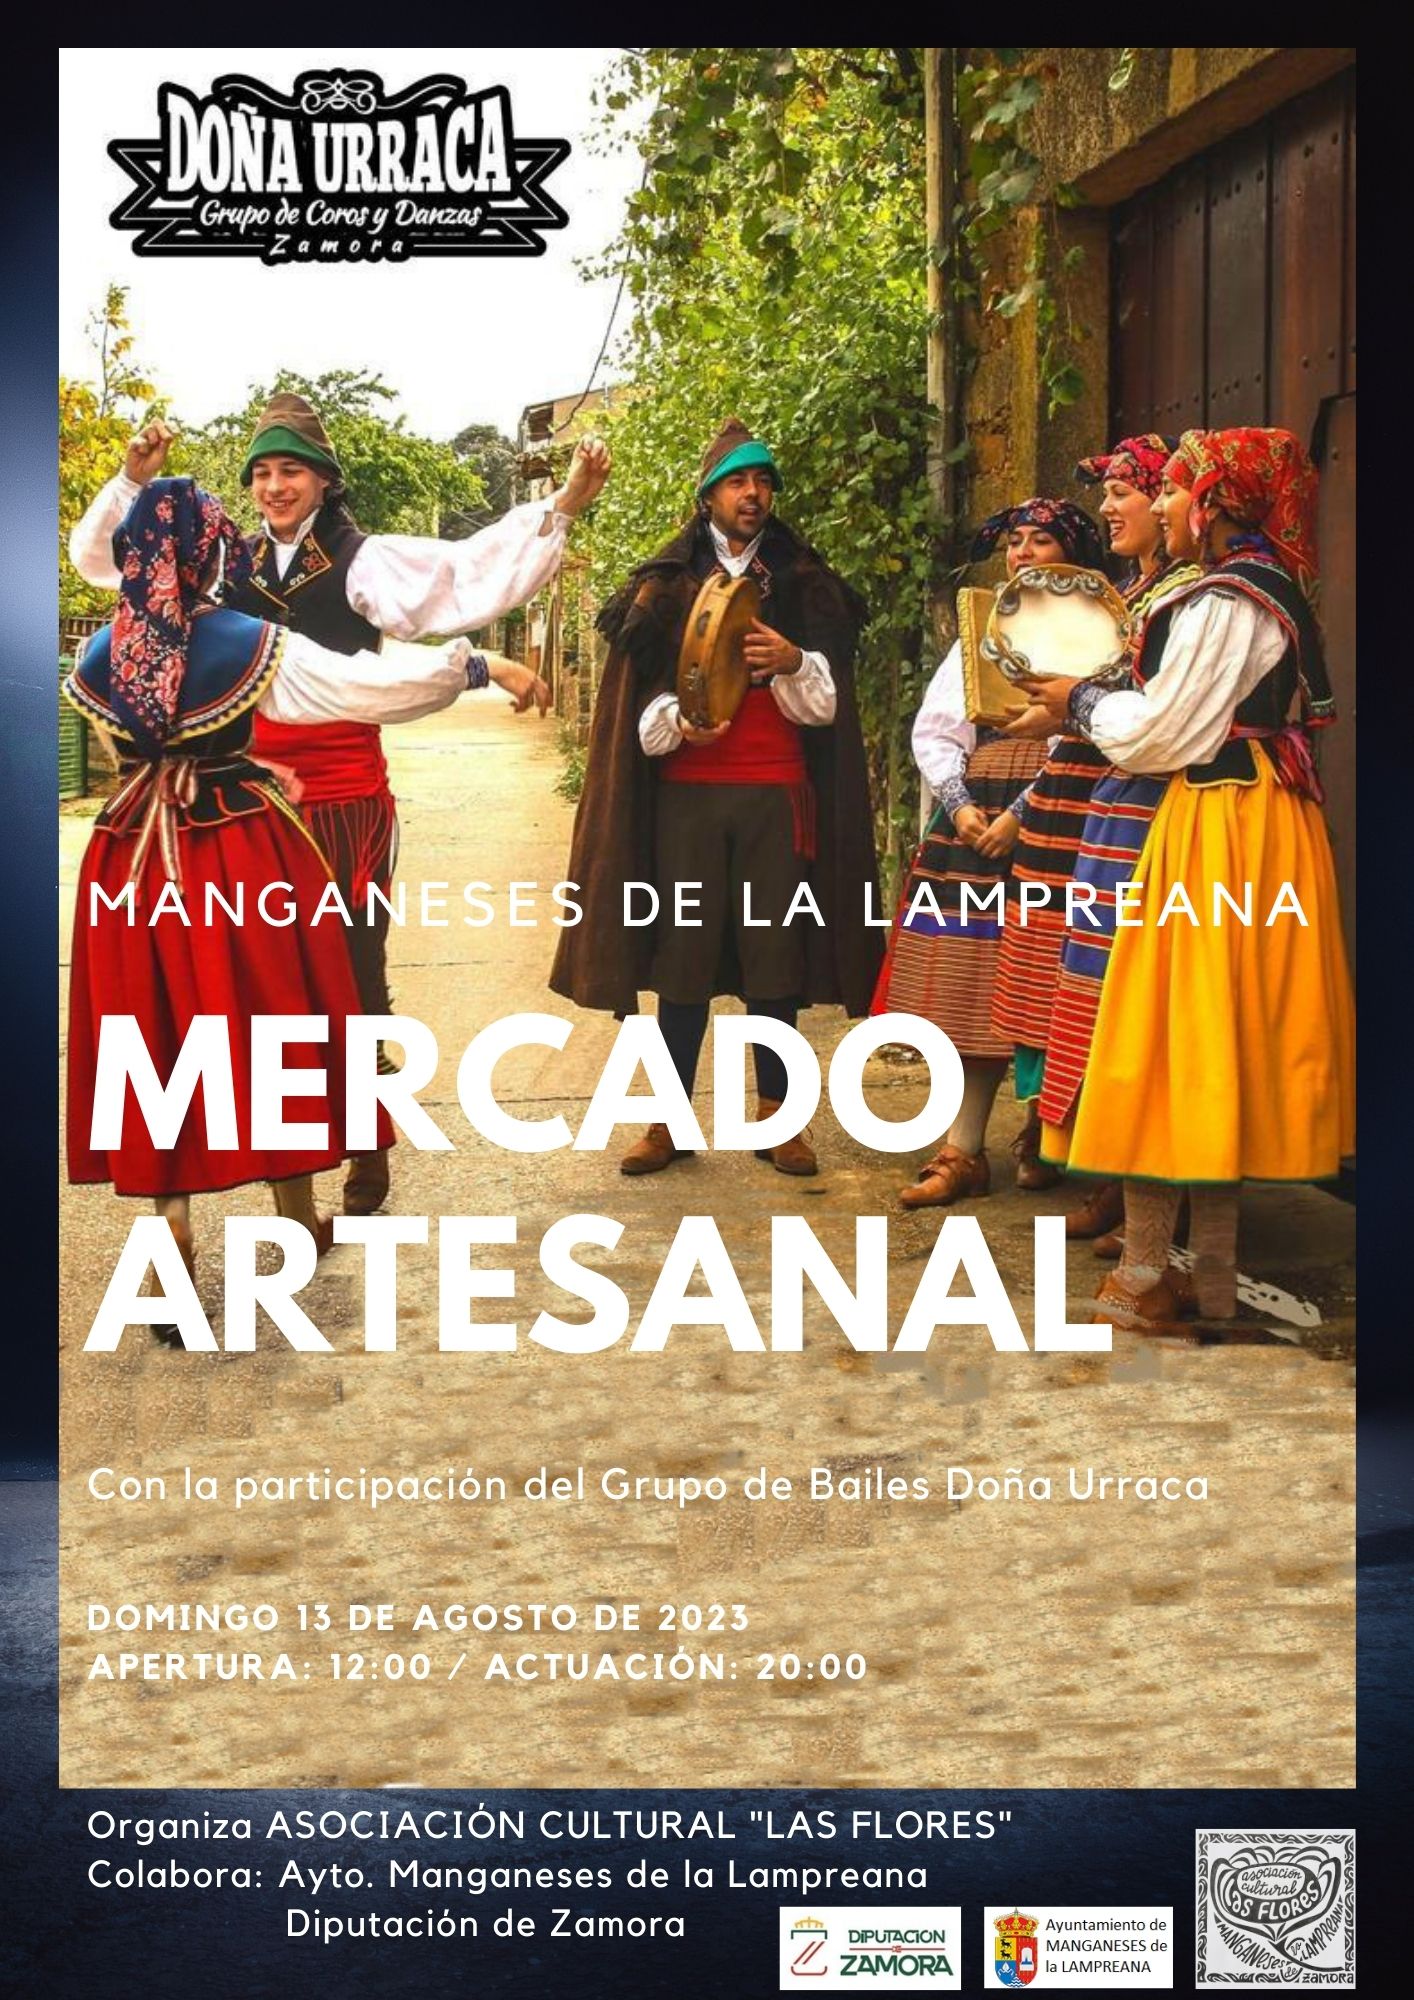 Mercado Artesanal en Manganeses de la Lampreana.